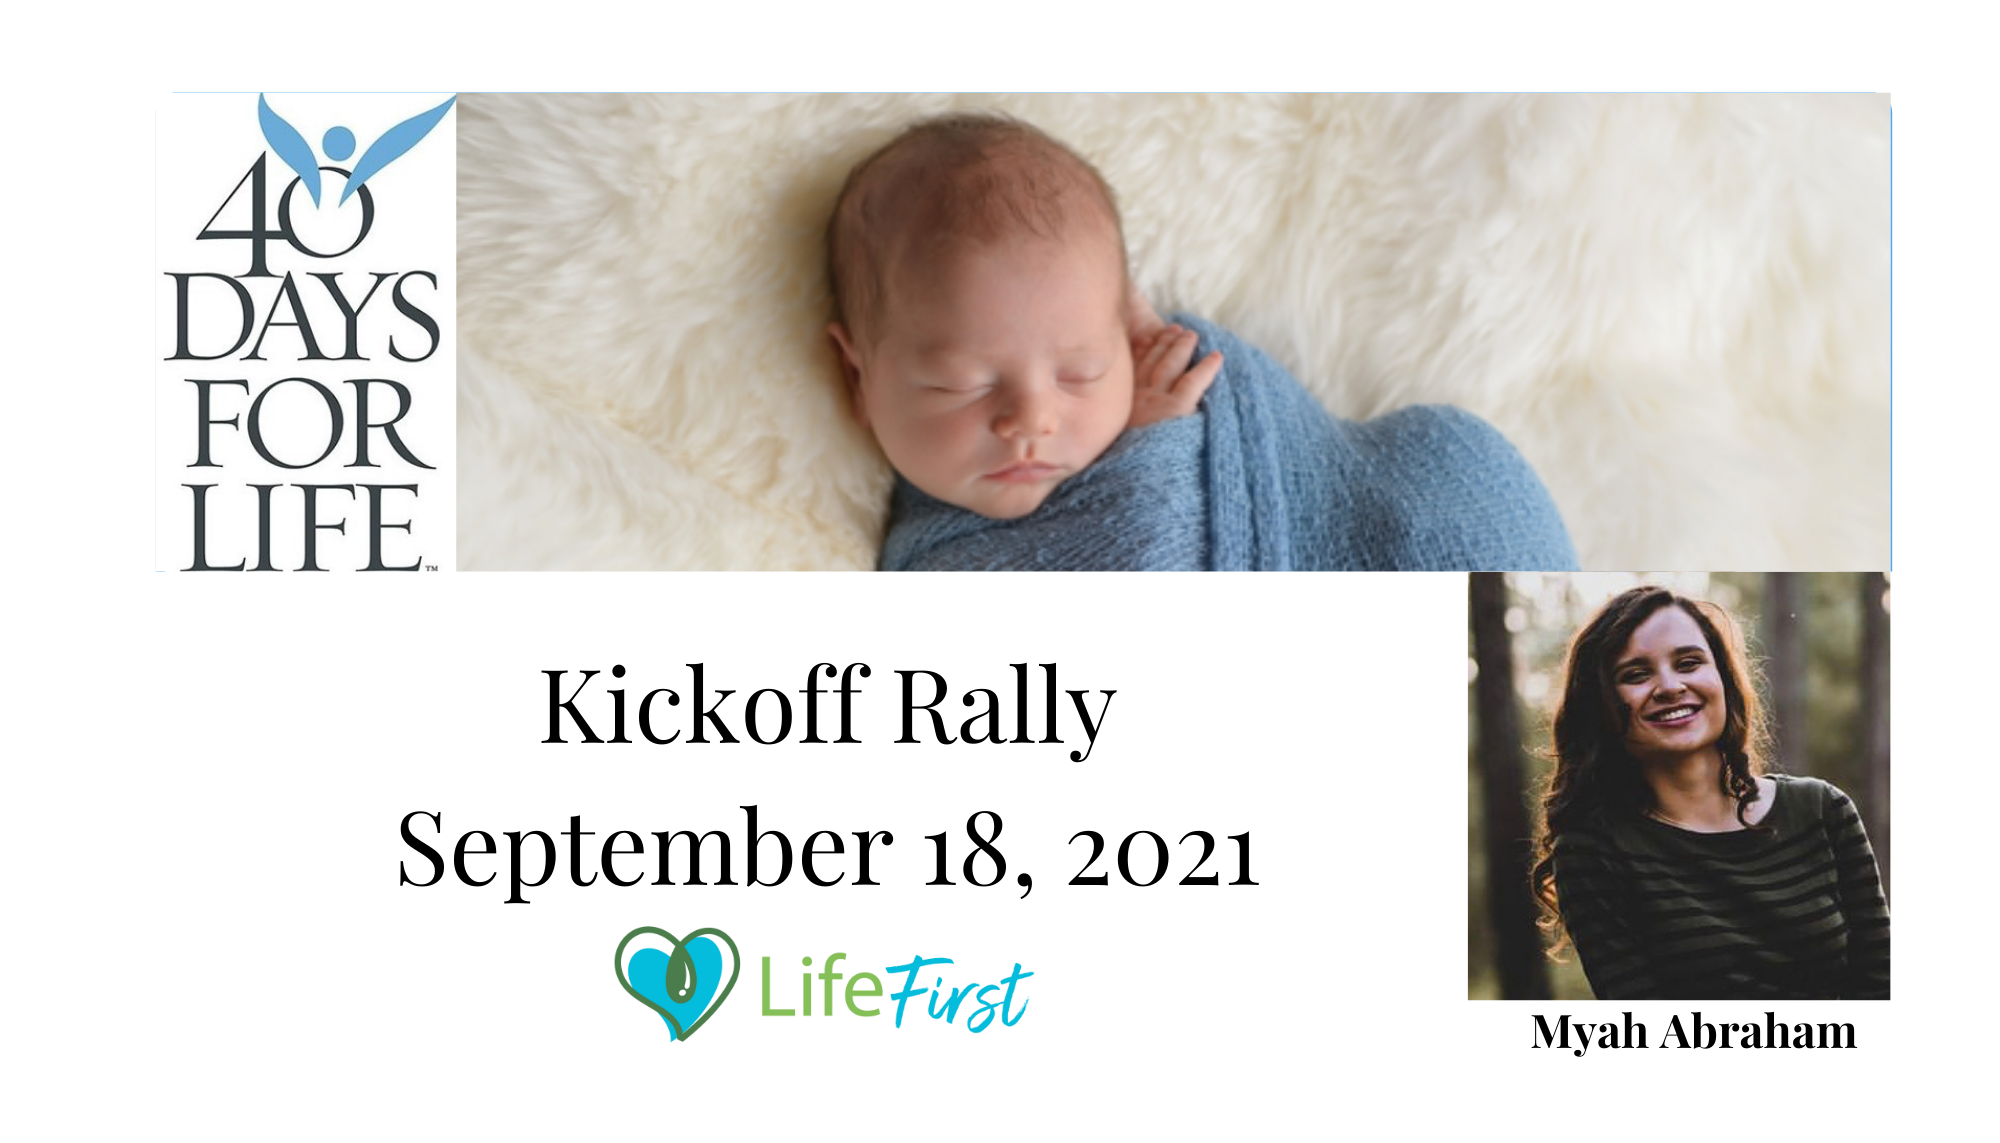 40 Days for Life Fall Kickoff Rally